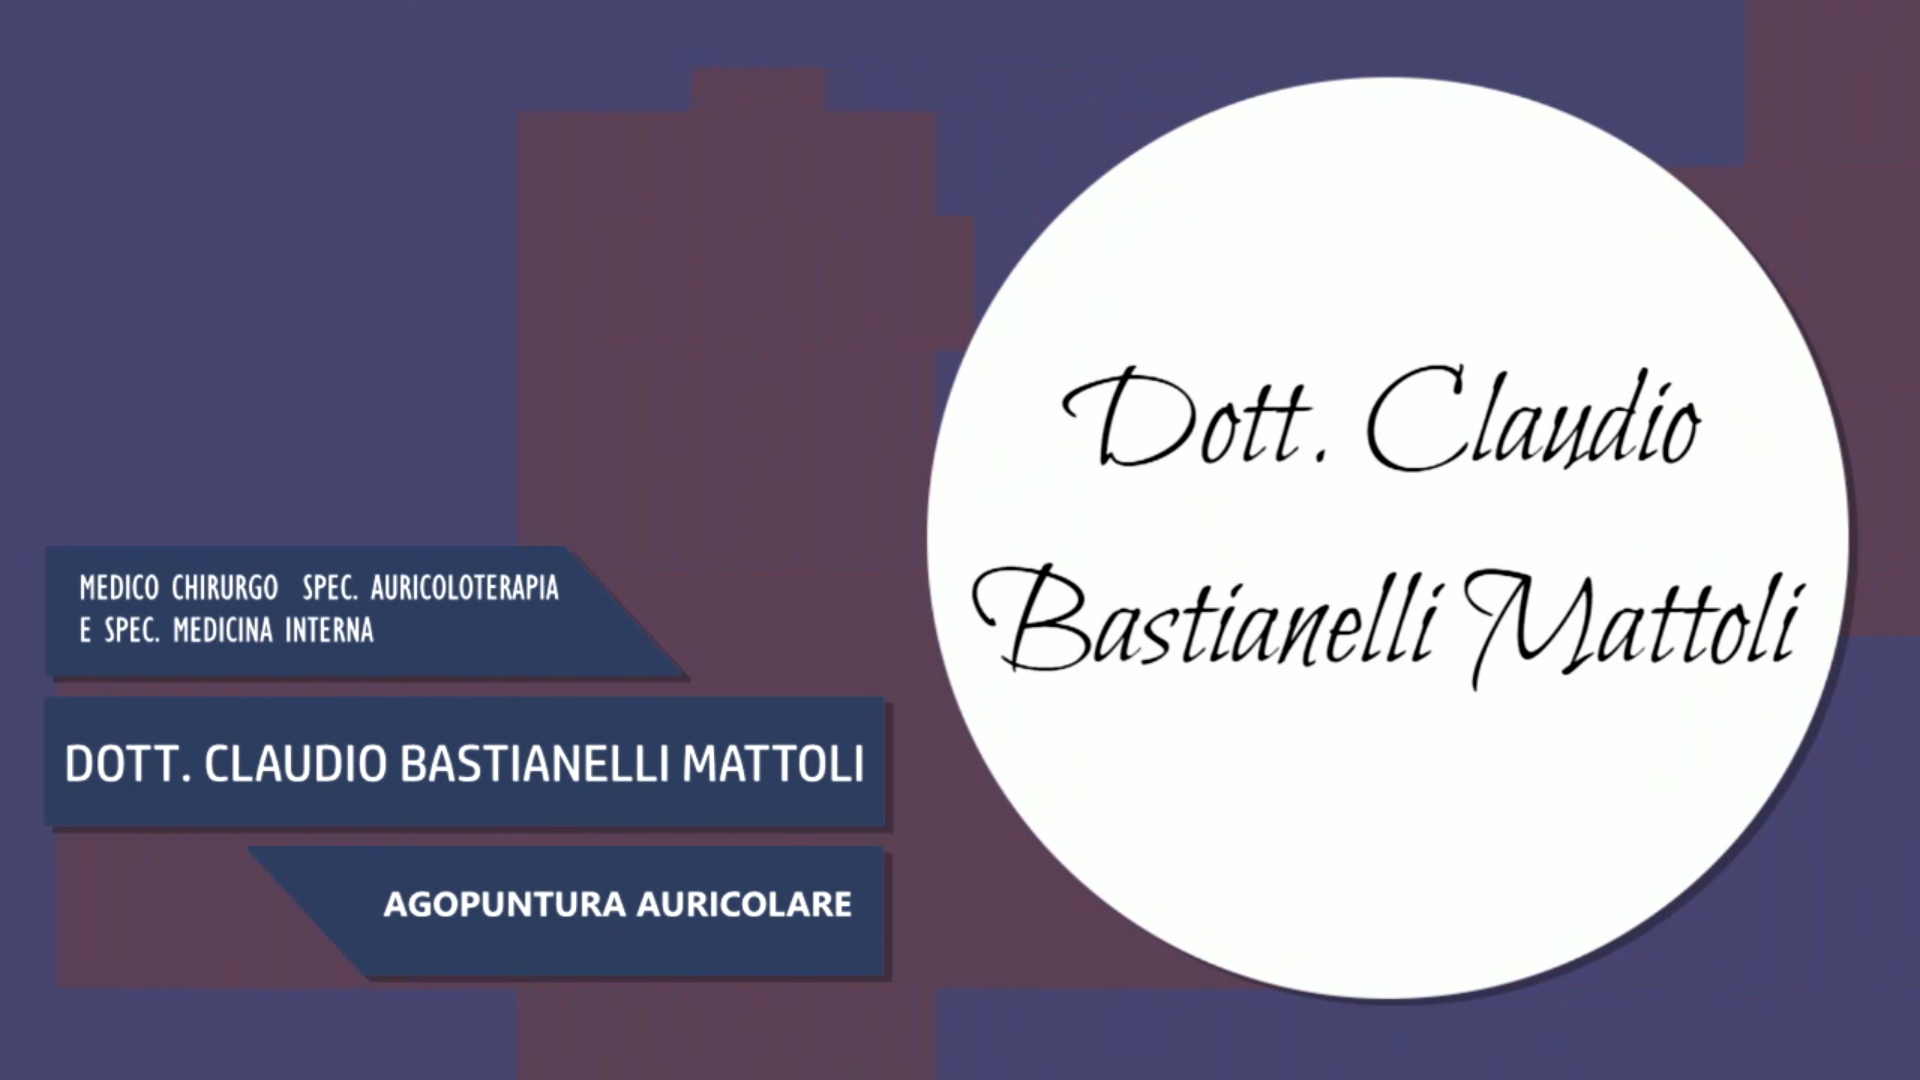 Intervista al Dott. Claudio Bastianelli Mattoli – Agopuntura Auricolare